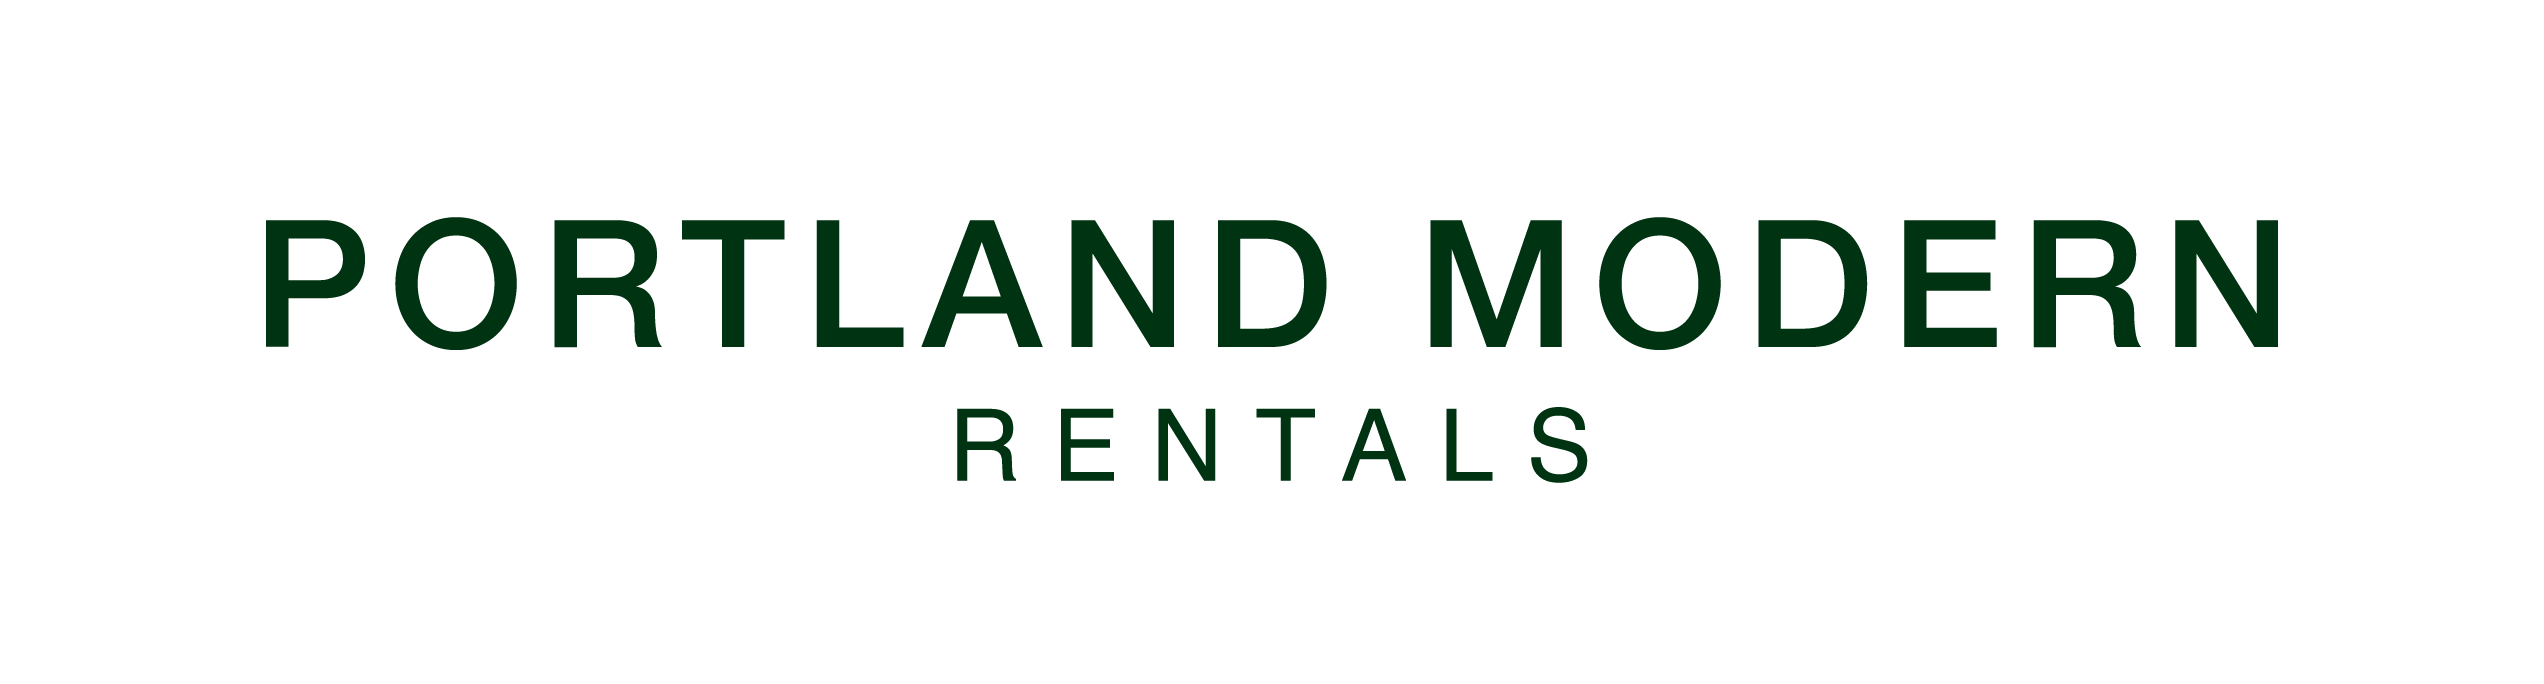 Portland Modern Rentals logo